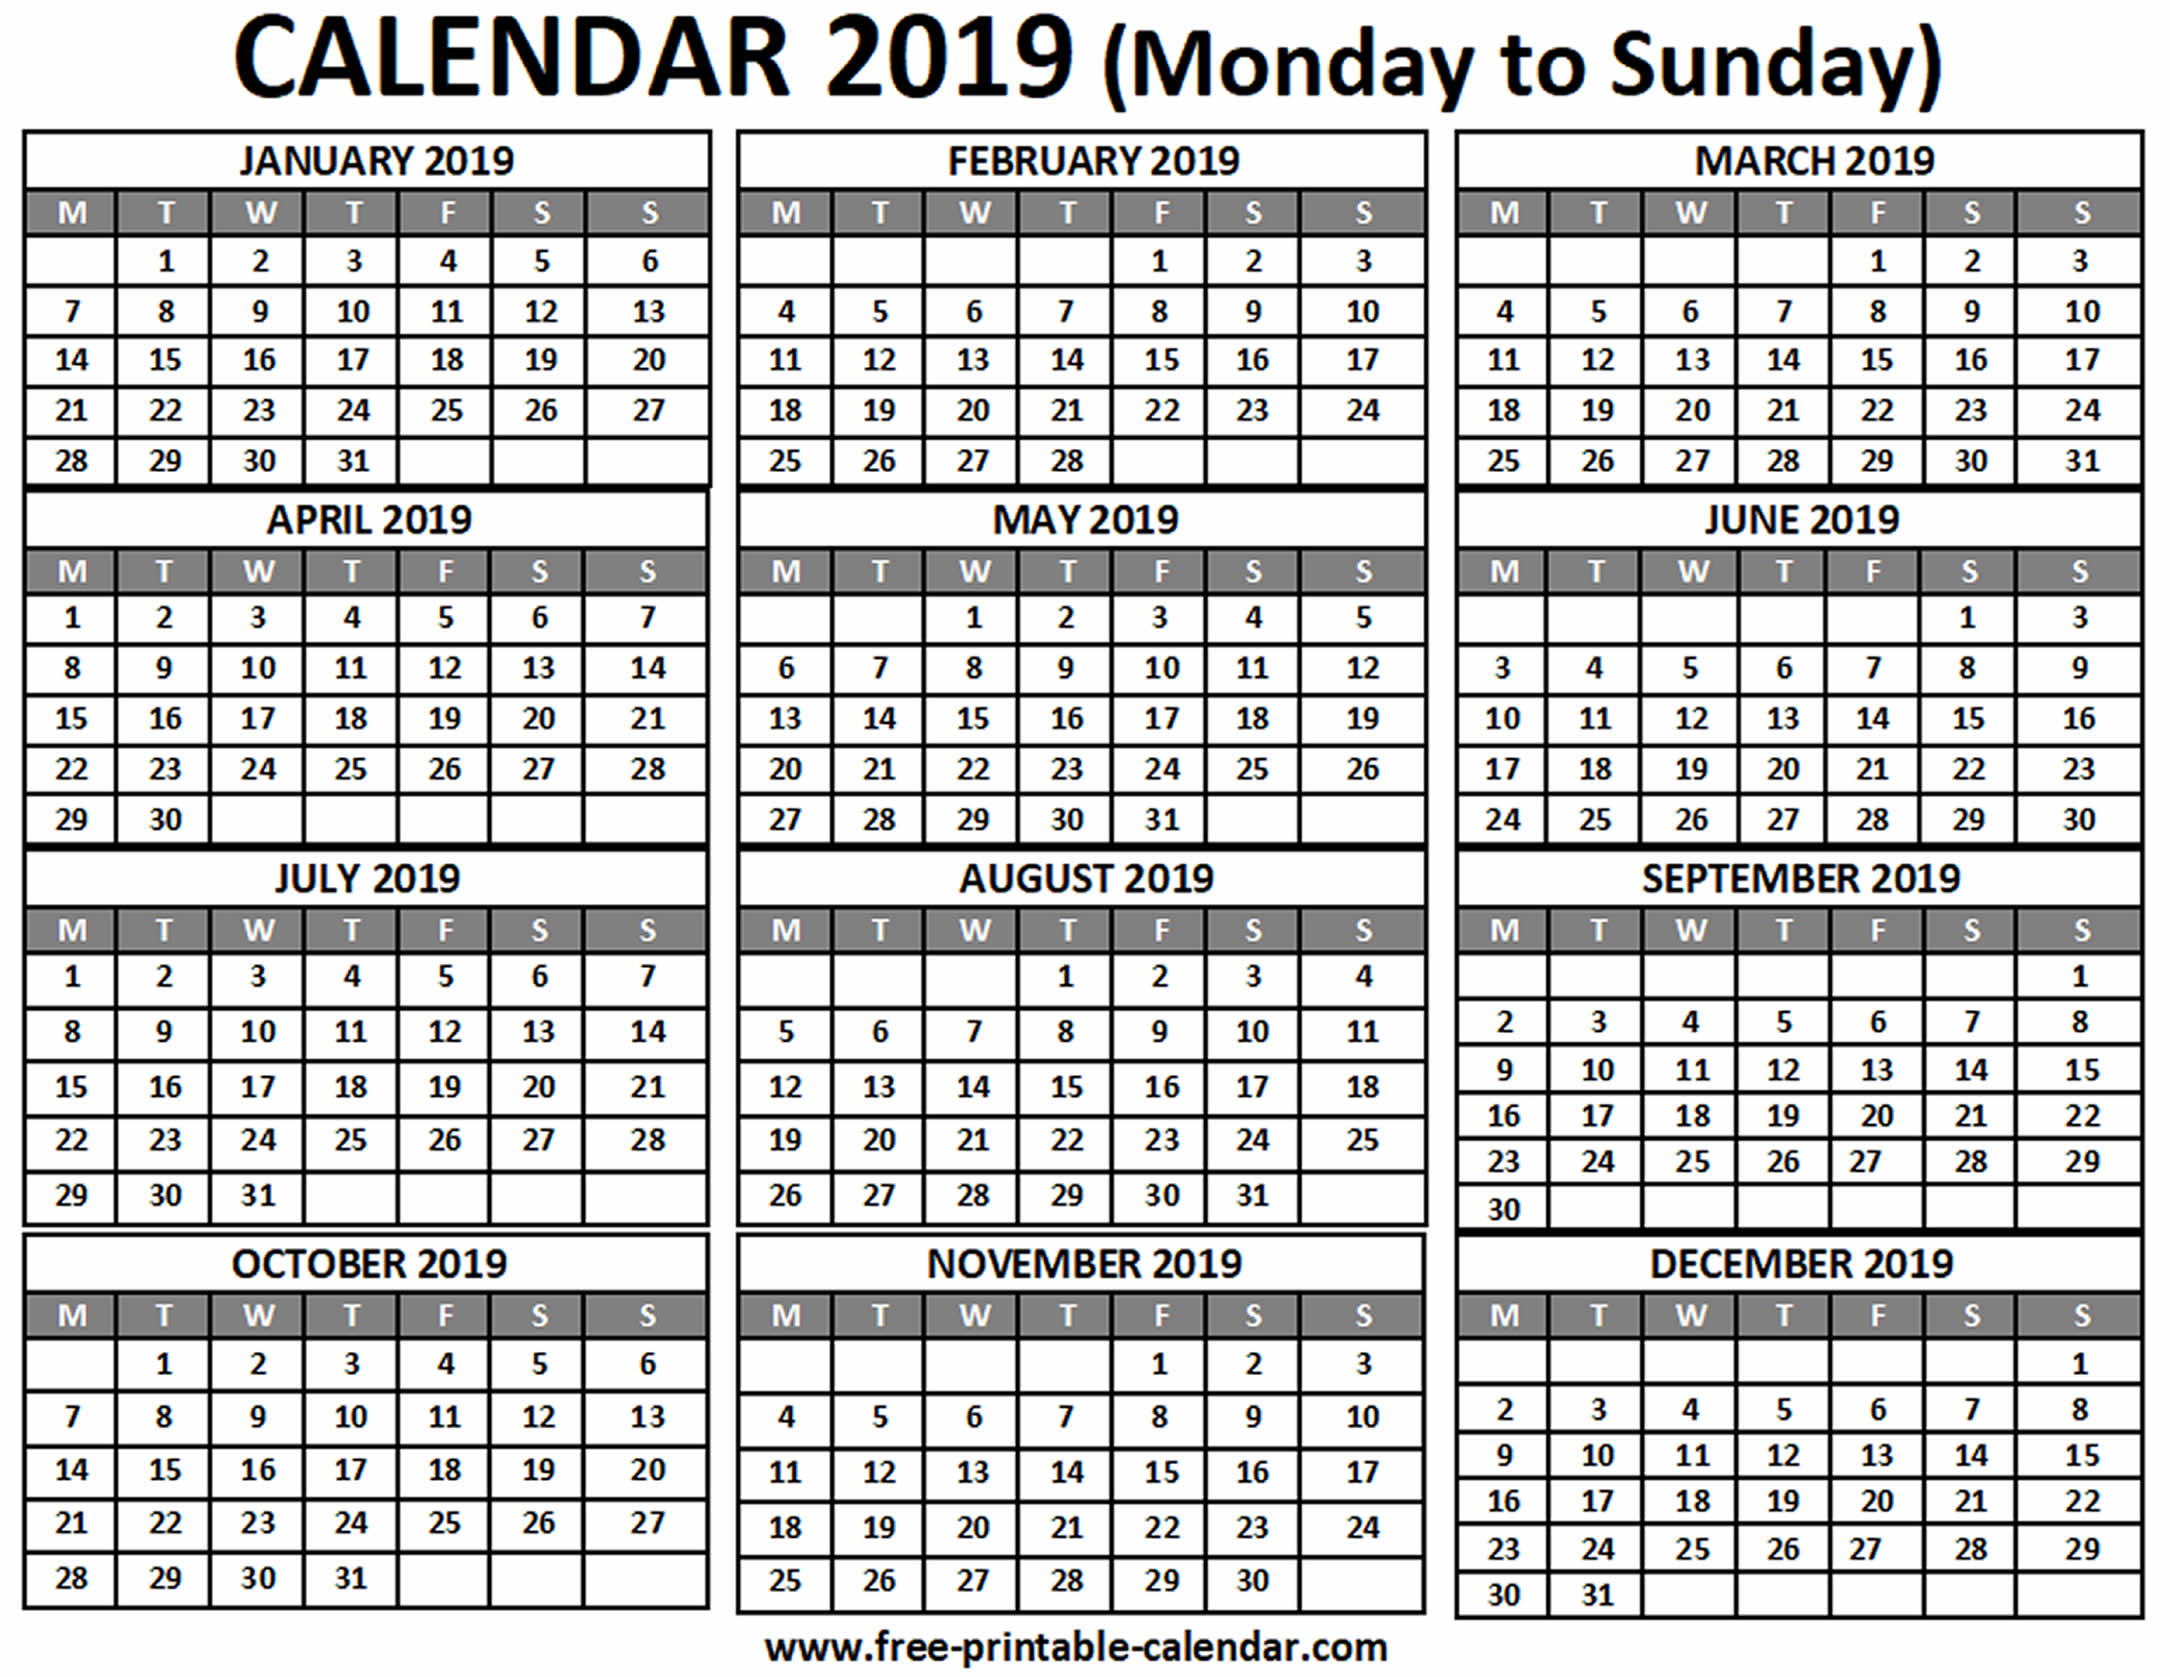 2019 Calendar - Free-Printable-Calendar